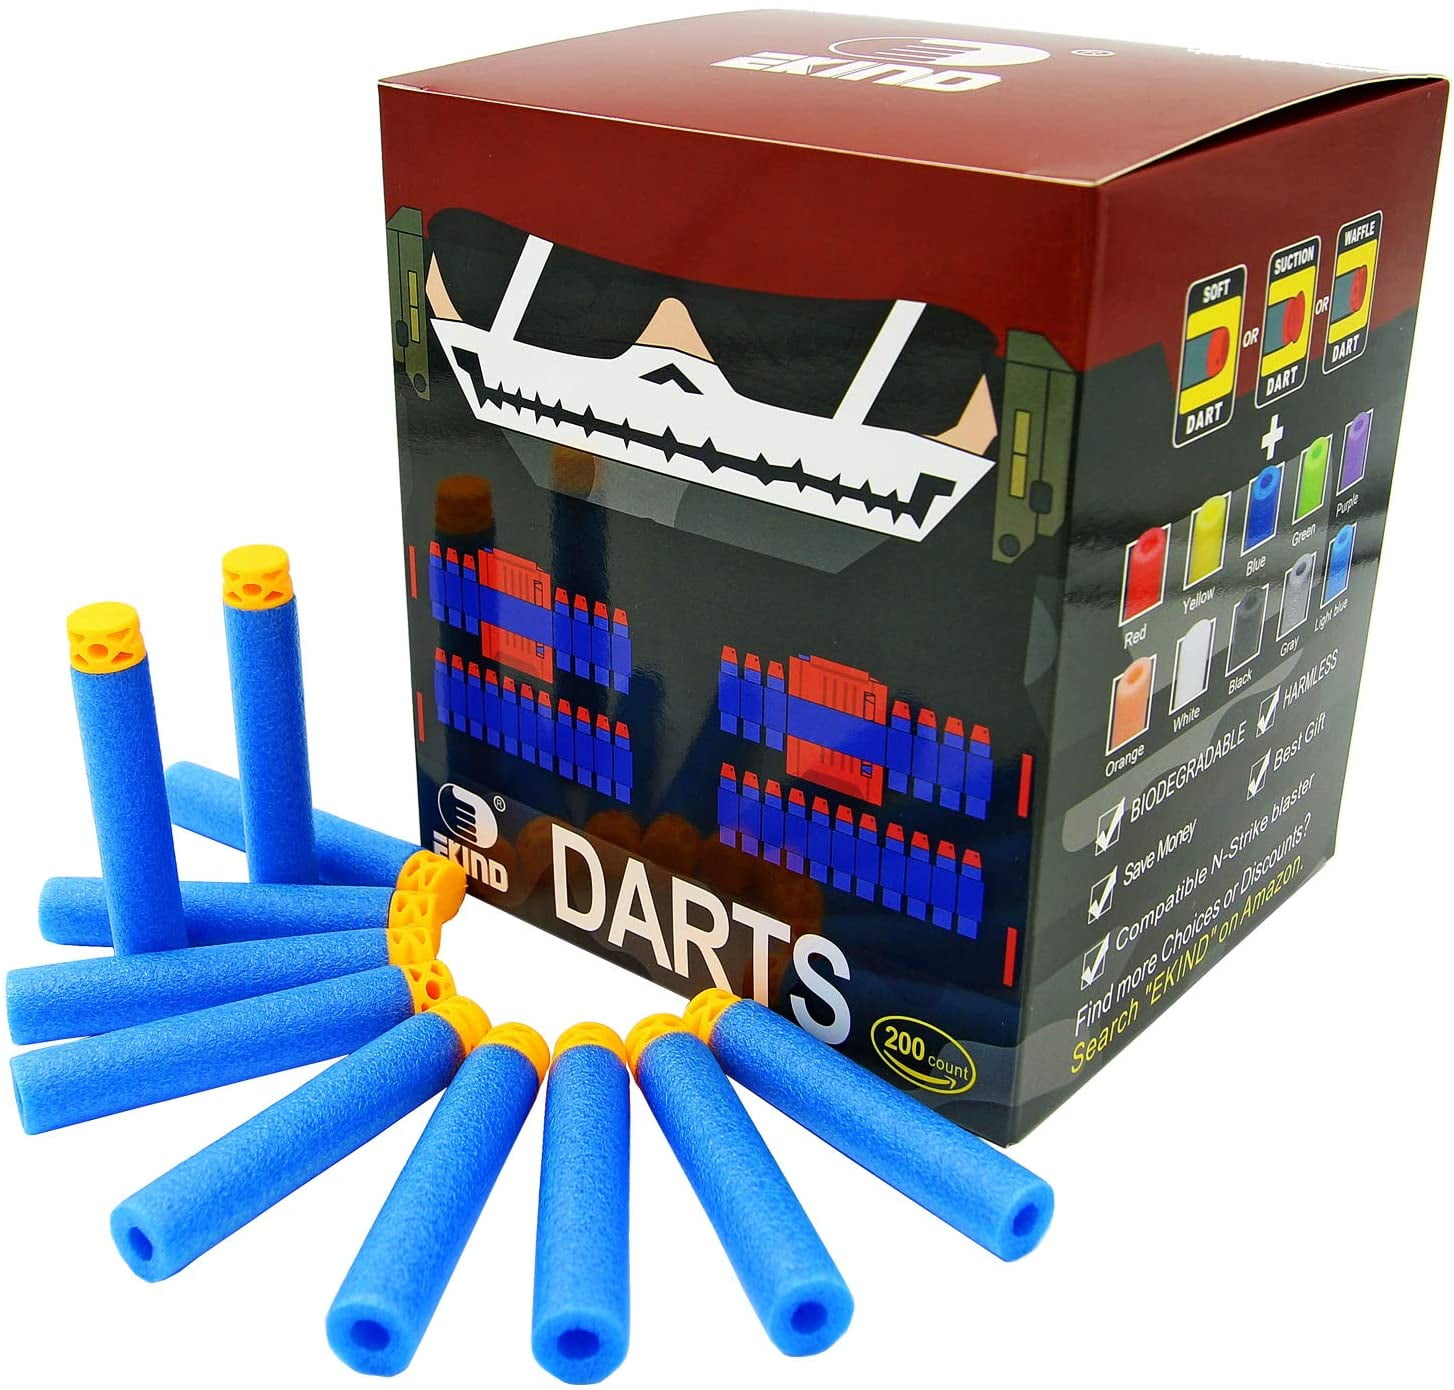 200pcs 7.2cm Refill Bullet Darts for Nerf N-strike Elite Series Blasters 